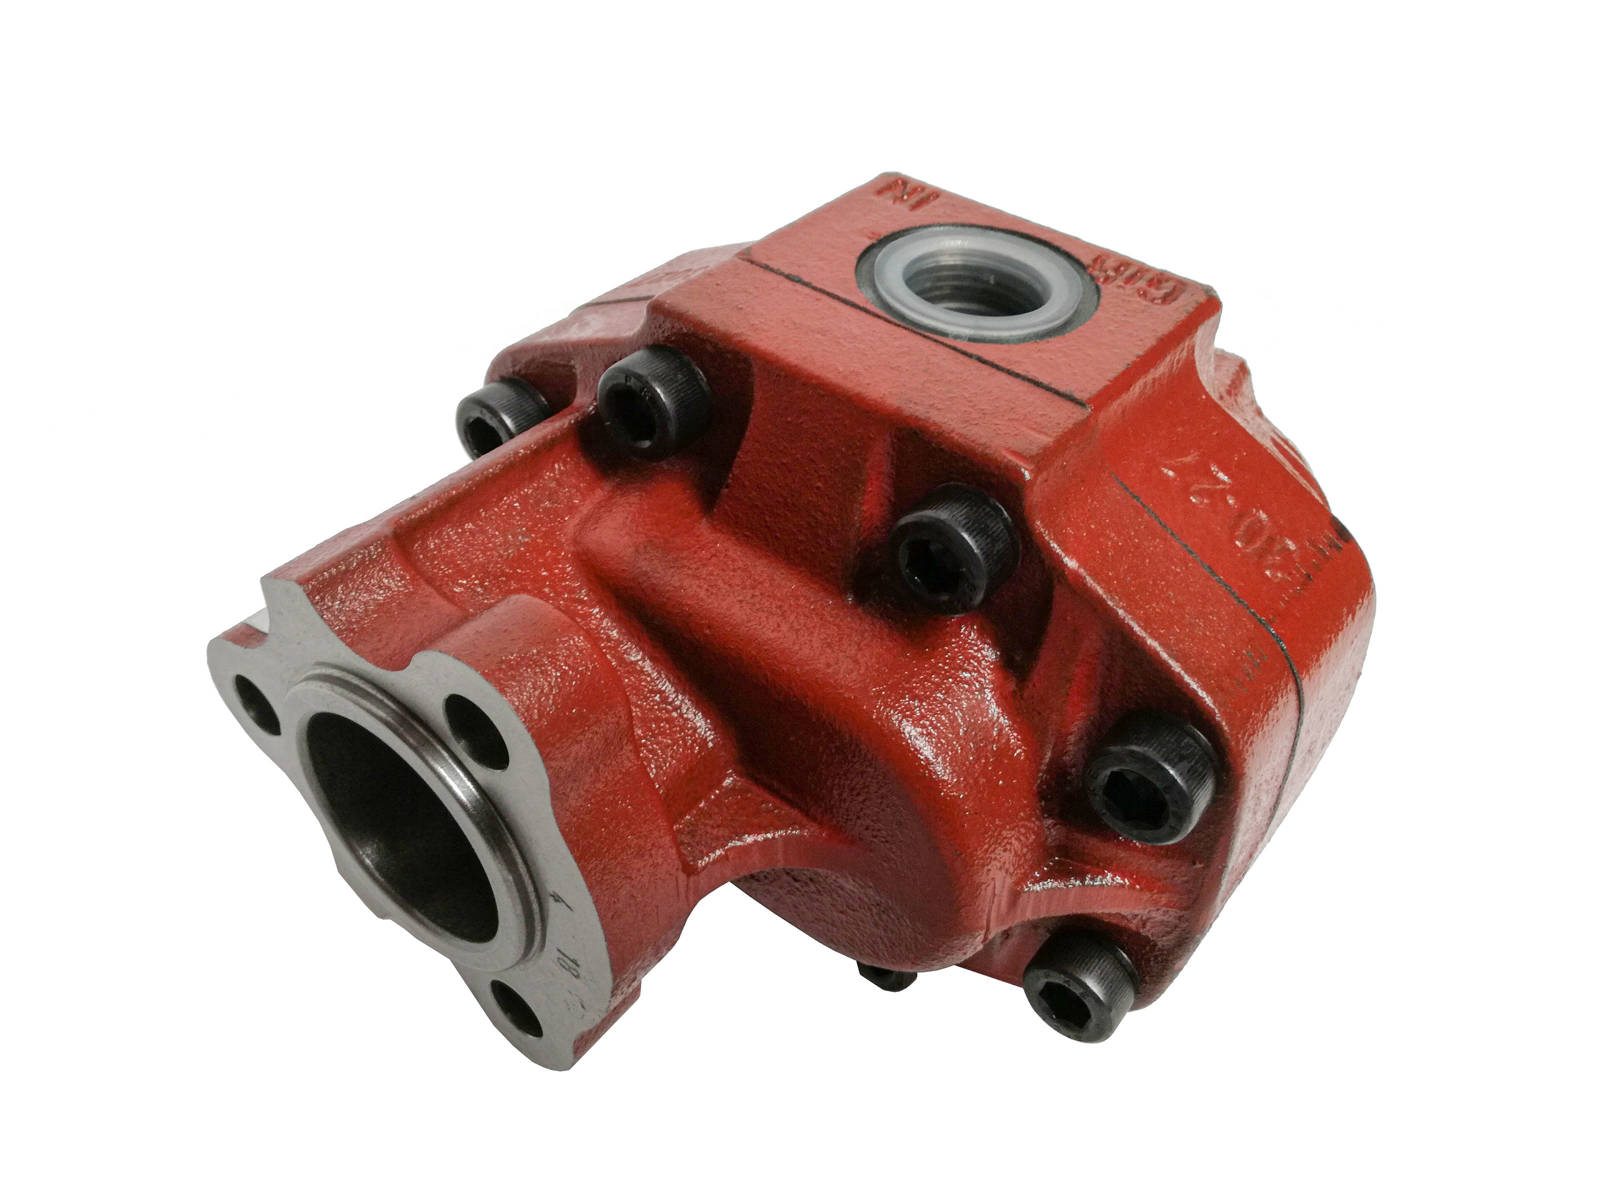 LIWA Gear pump, type 17, clockwise rotation, UNI, 22238017